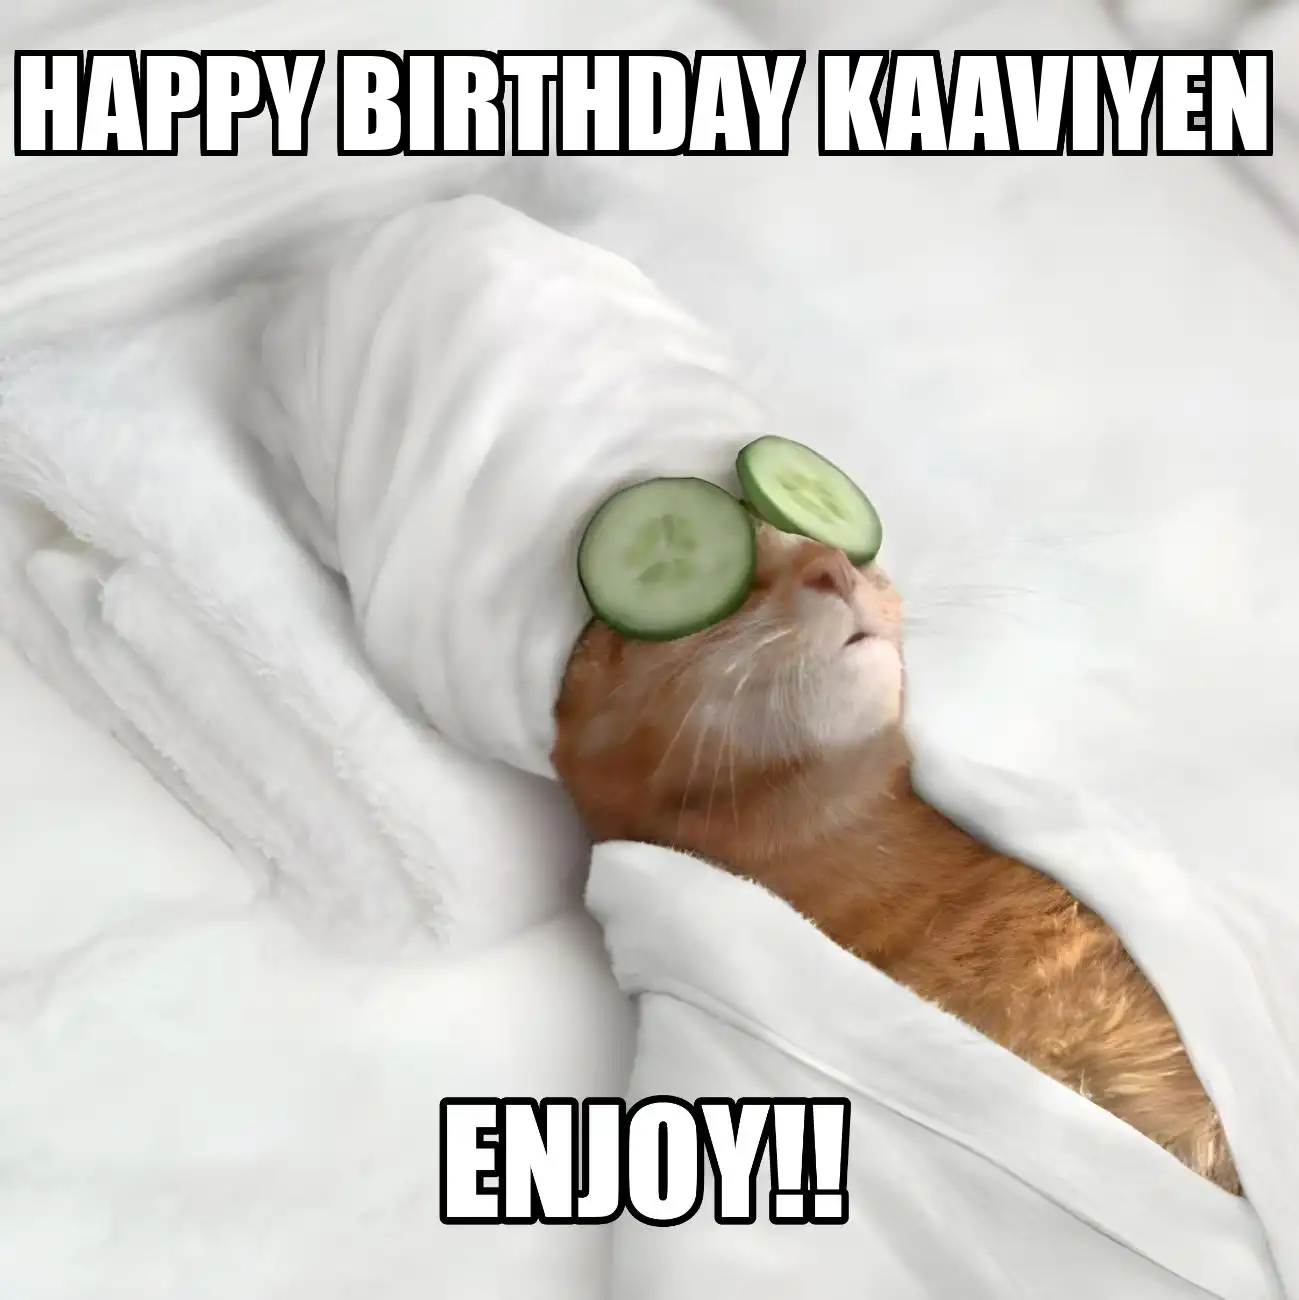 Happy Birthday Kaaviyen Enjoy Cat Meme